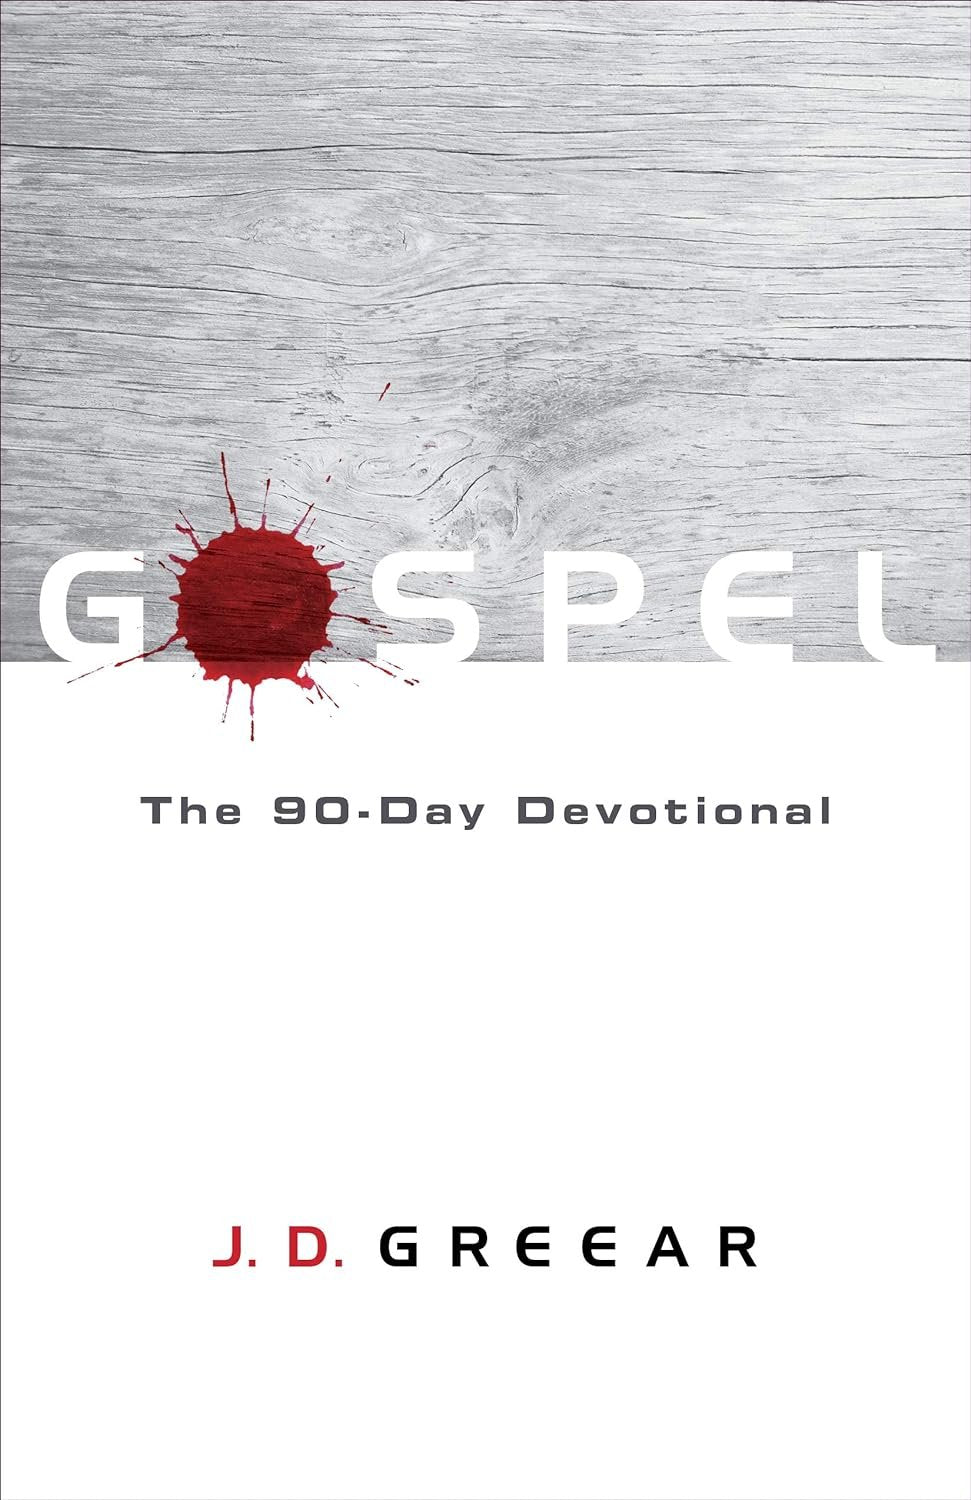 Gospel: The 90-Day Devotional